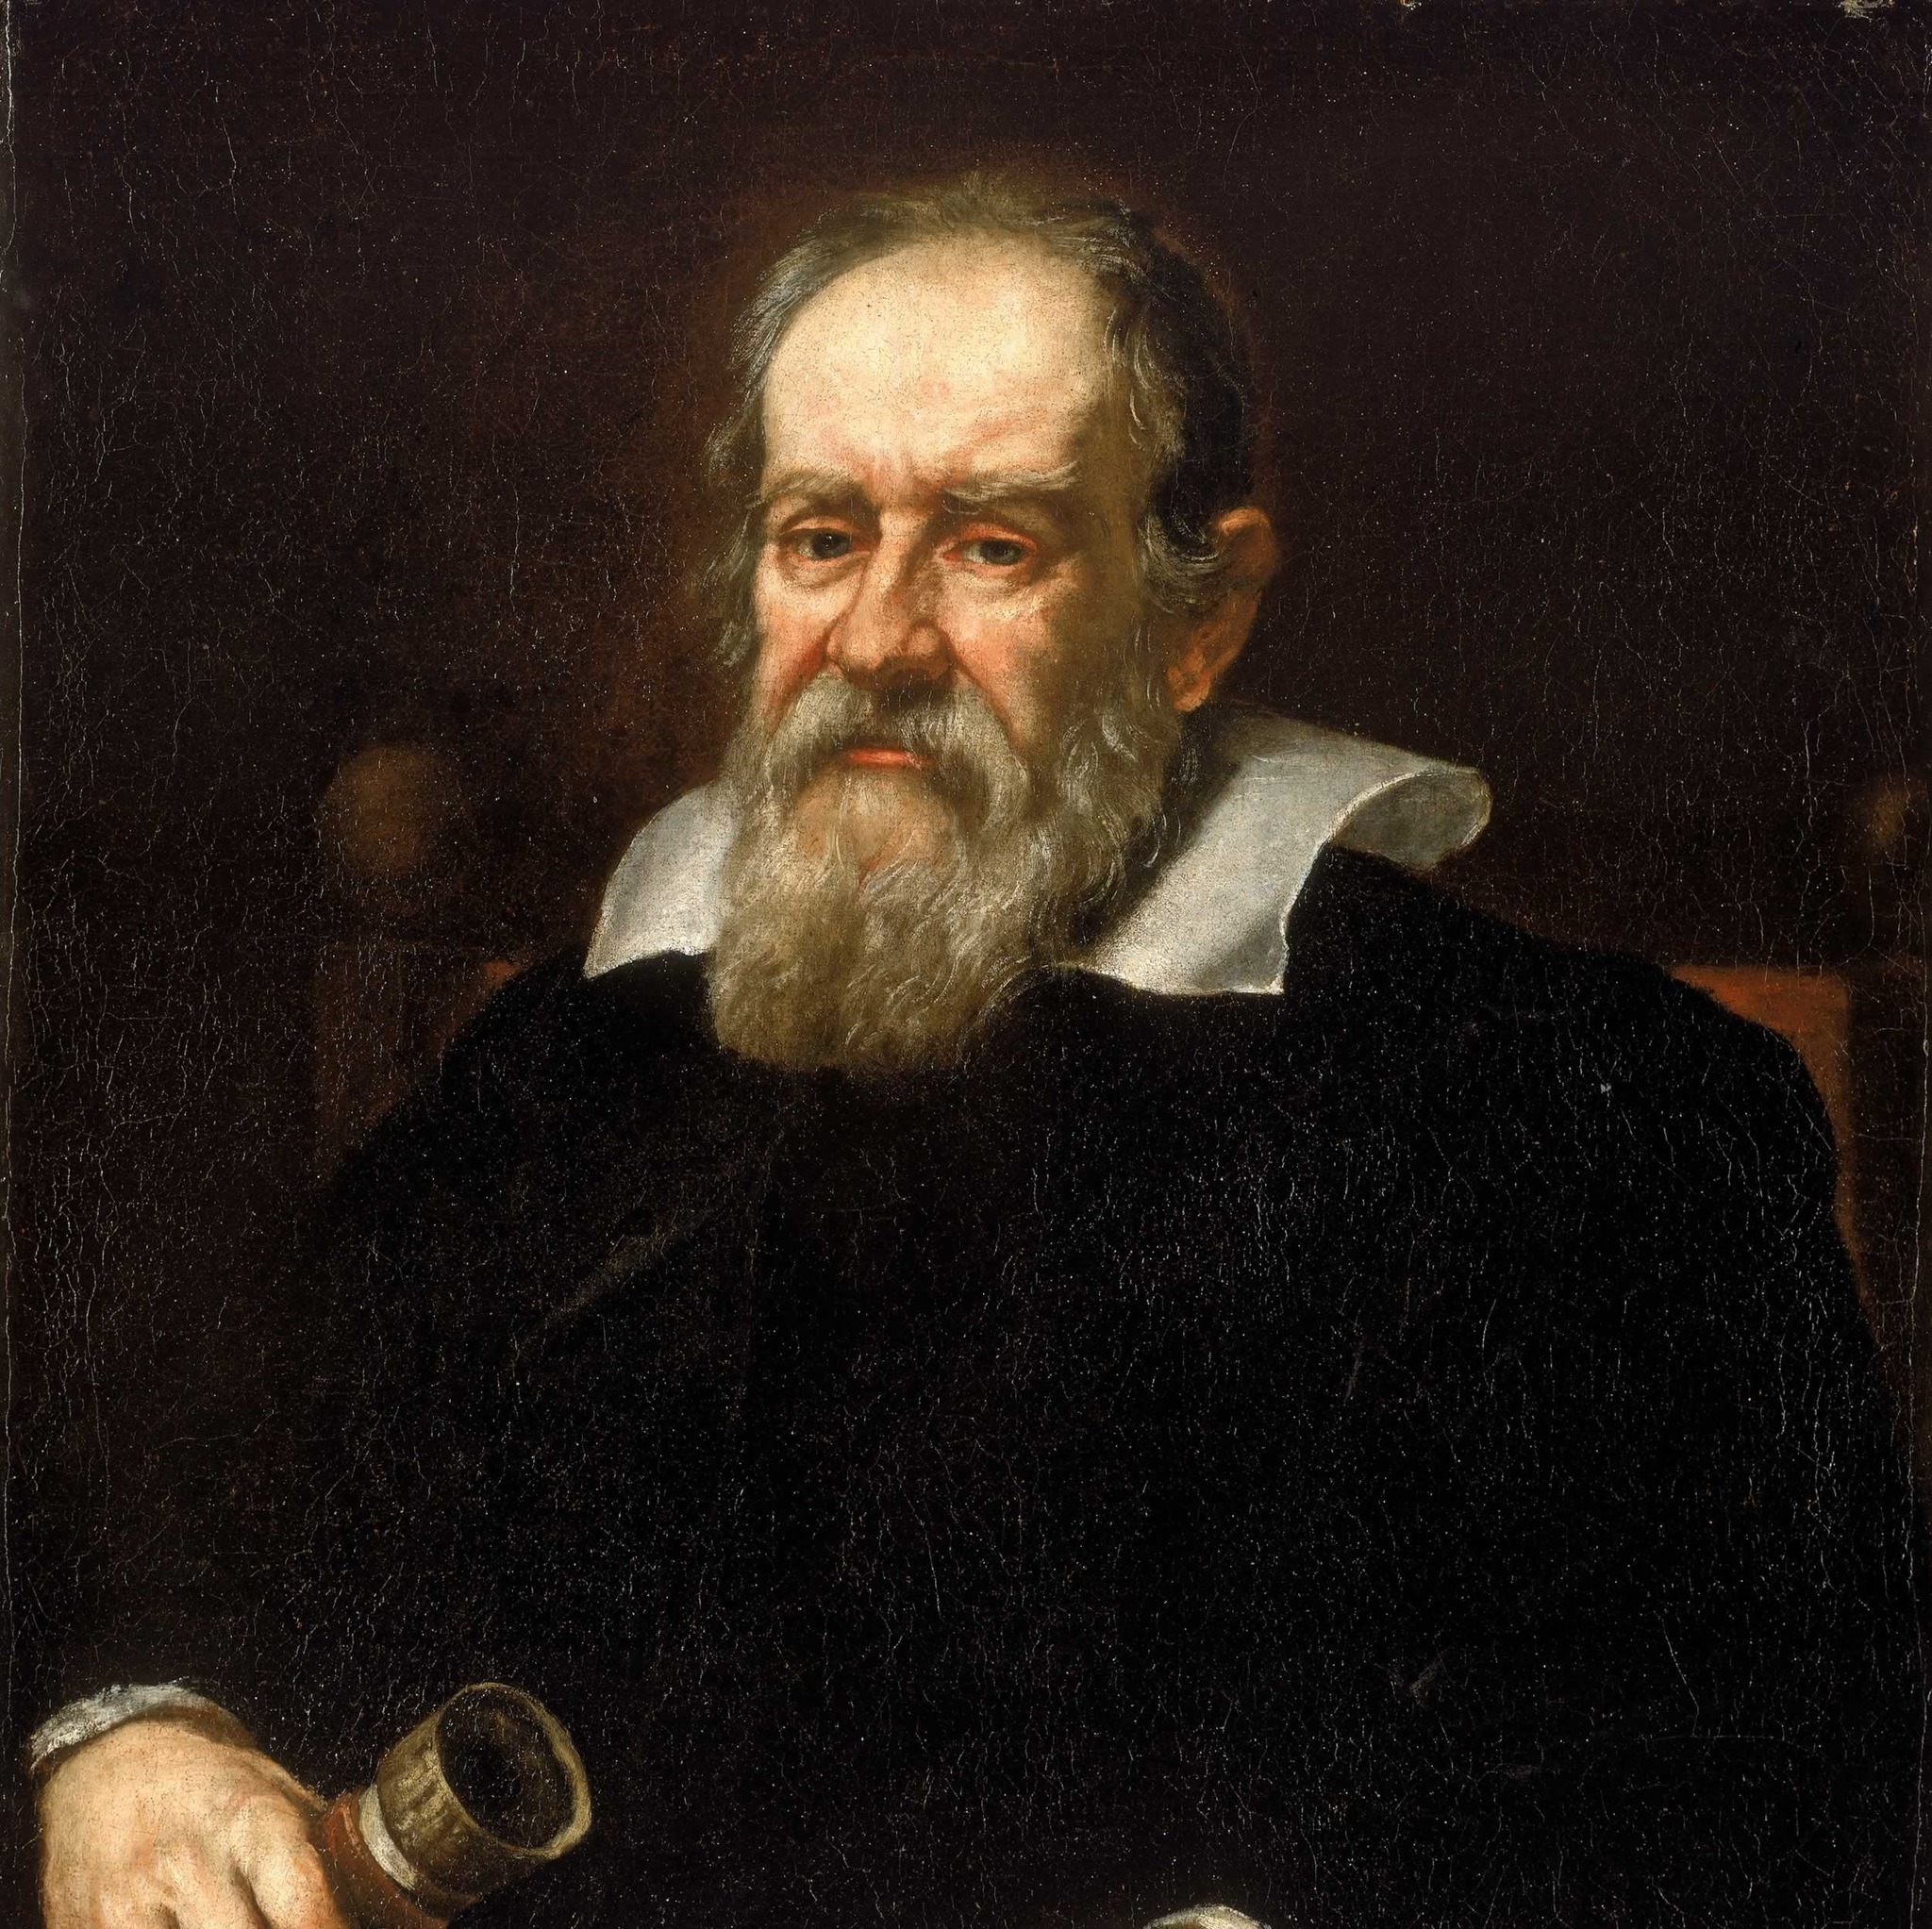 Galileo Galilei portrait by Justus Sustermans (1636)